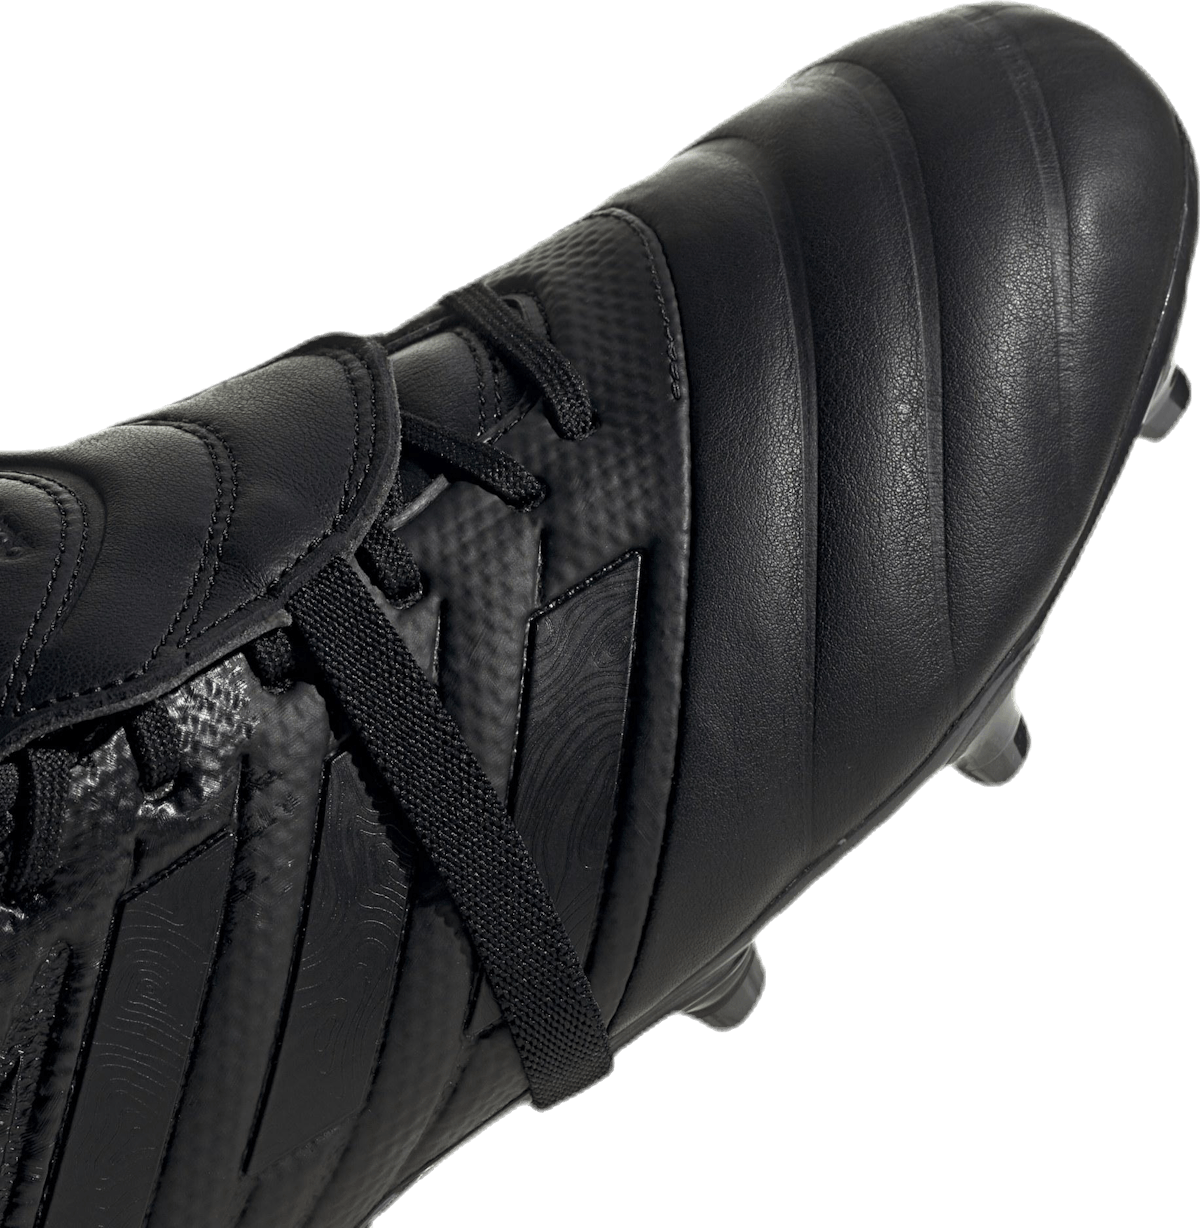 Copa Gloro 20.2 Firm Ground Boots Black